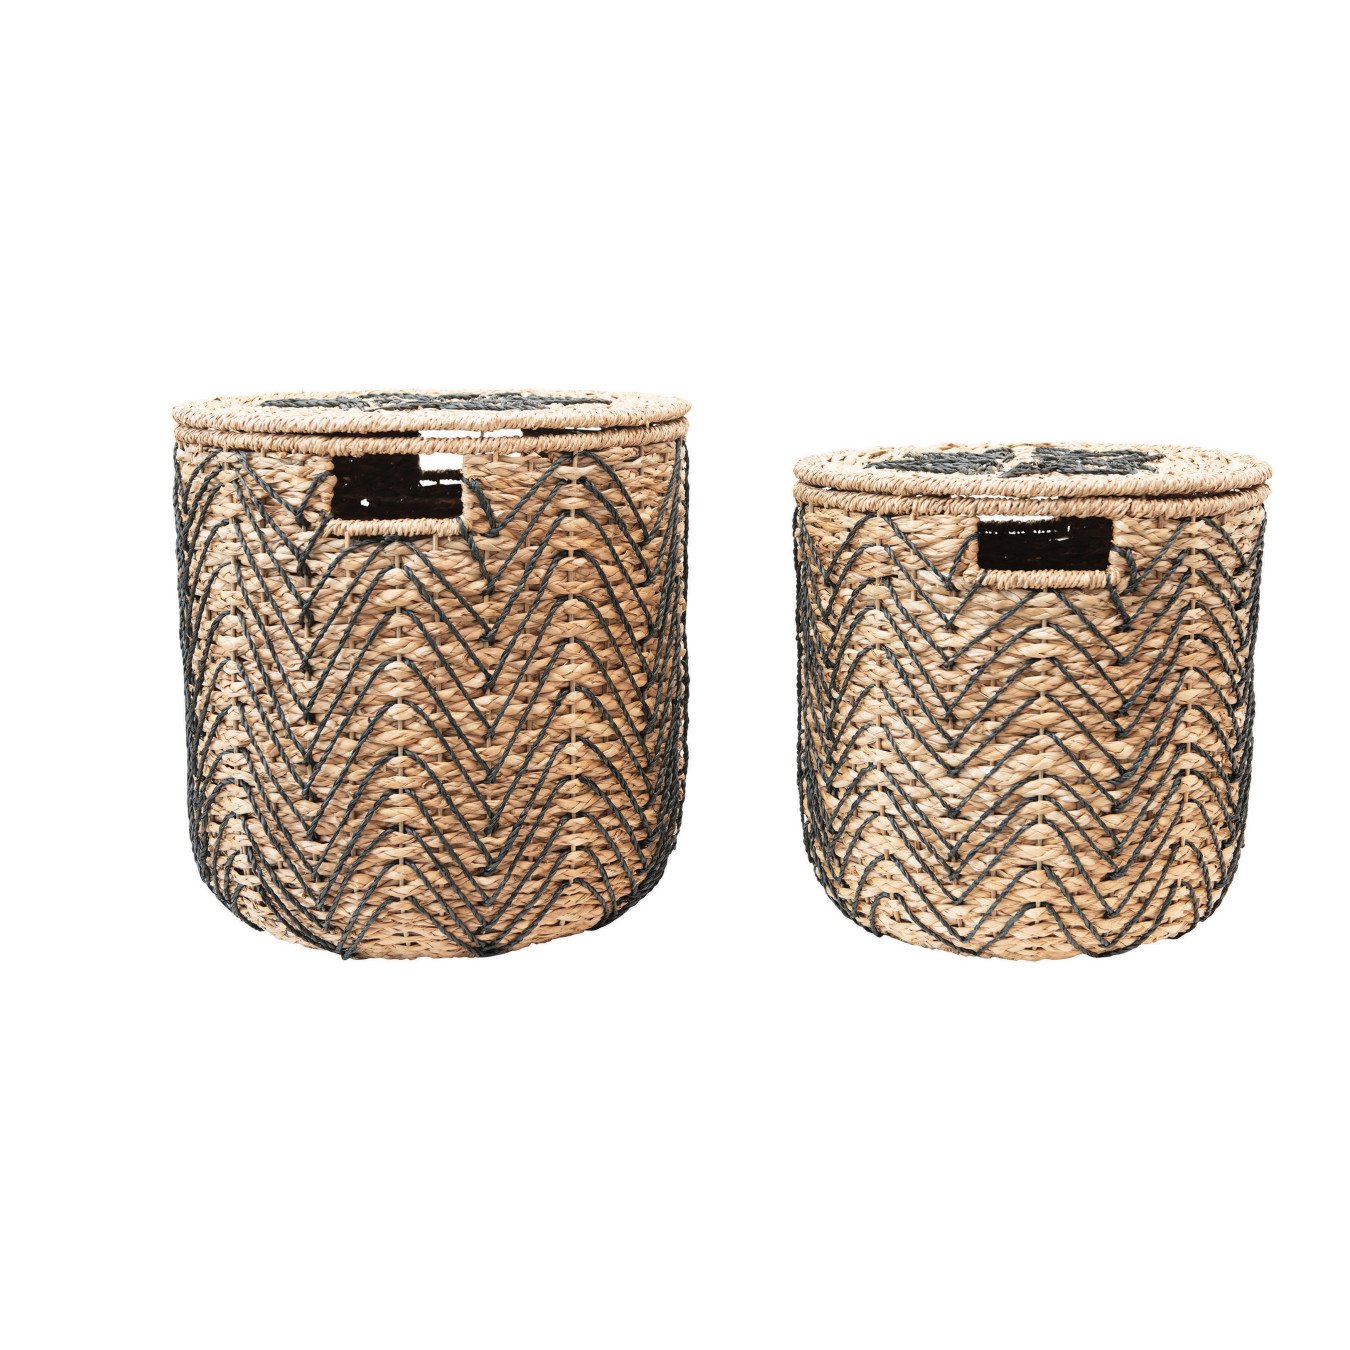 Handmade Woven Bankuan Baskets with Lids, Natural & Black, Set of 2